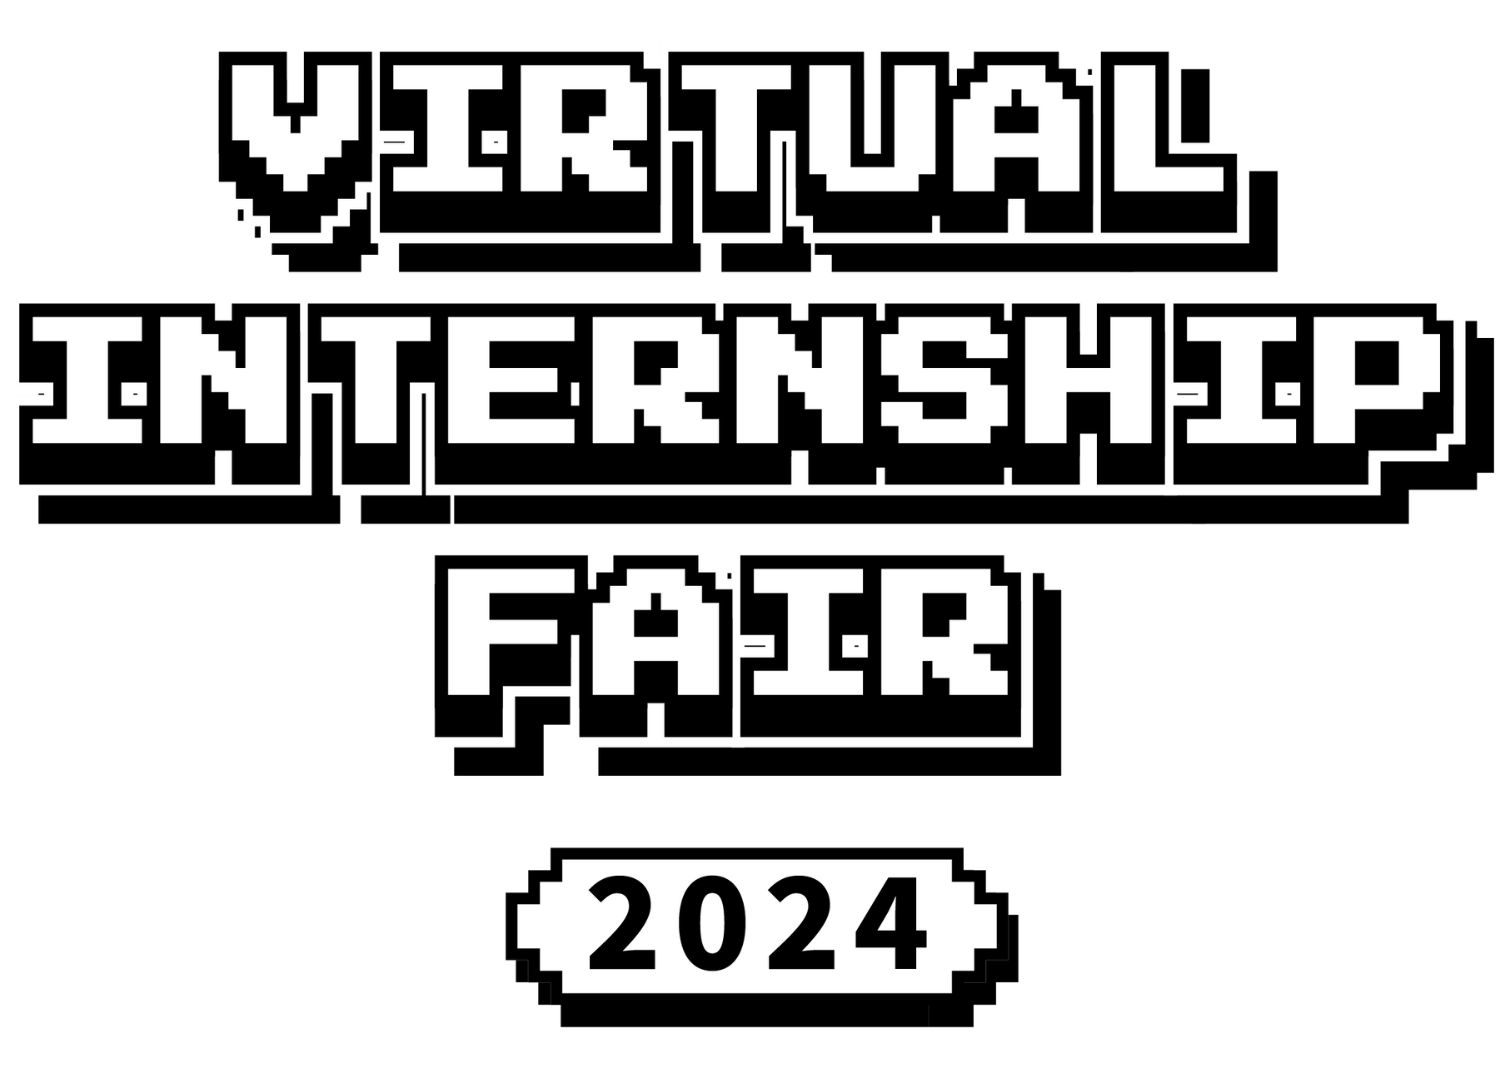 Virtual Internship Fair CakeResume 2024